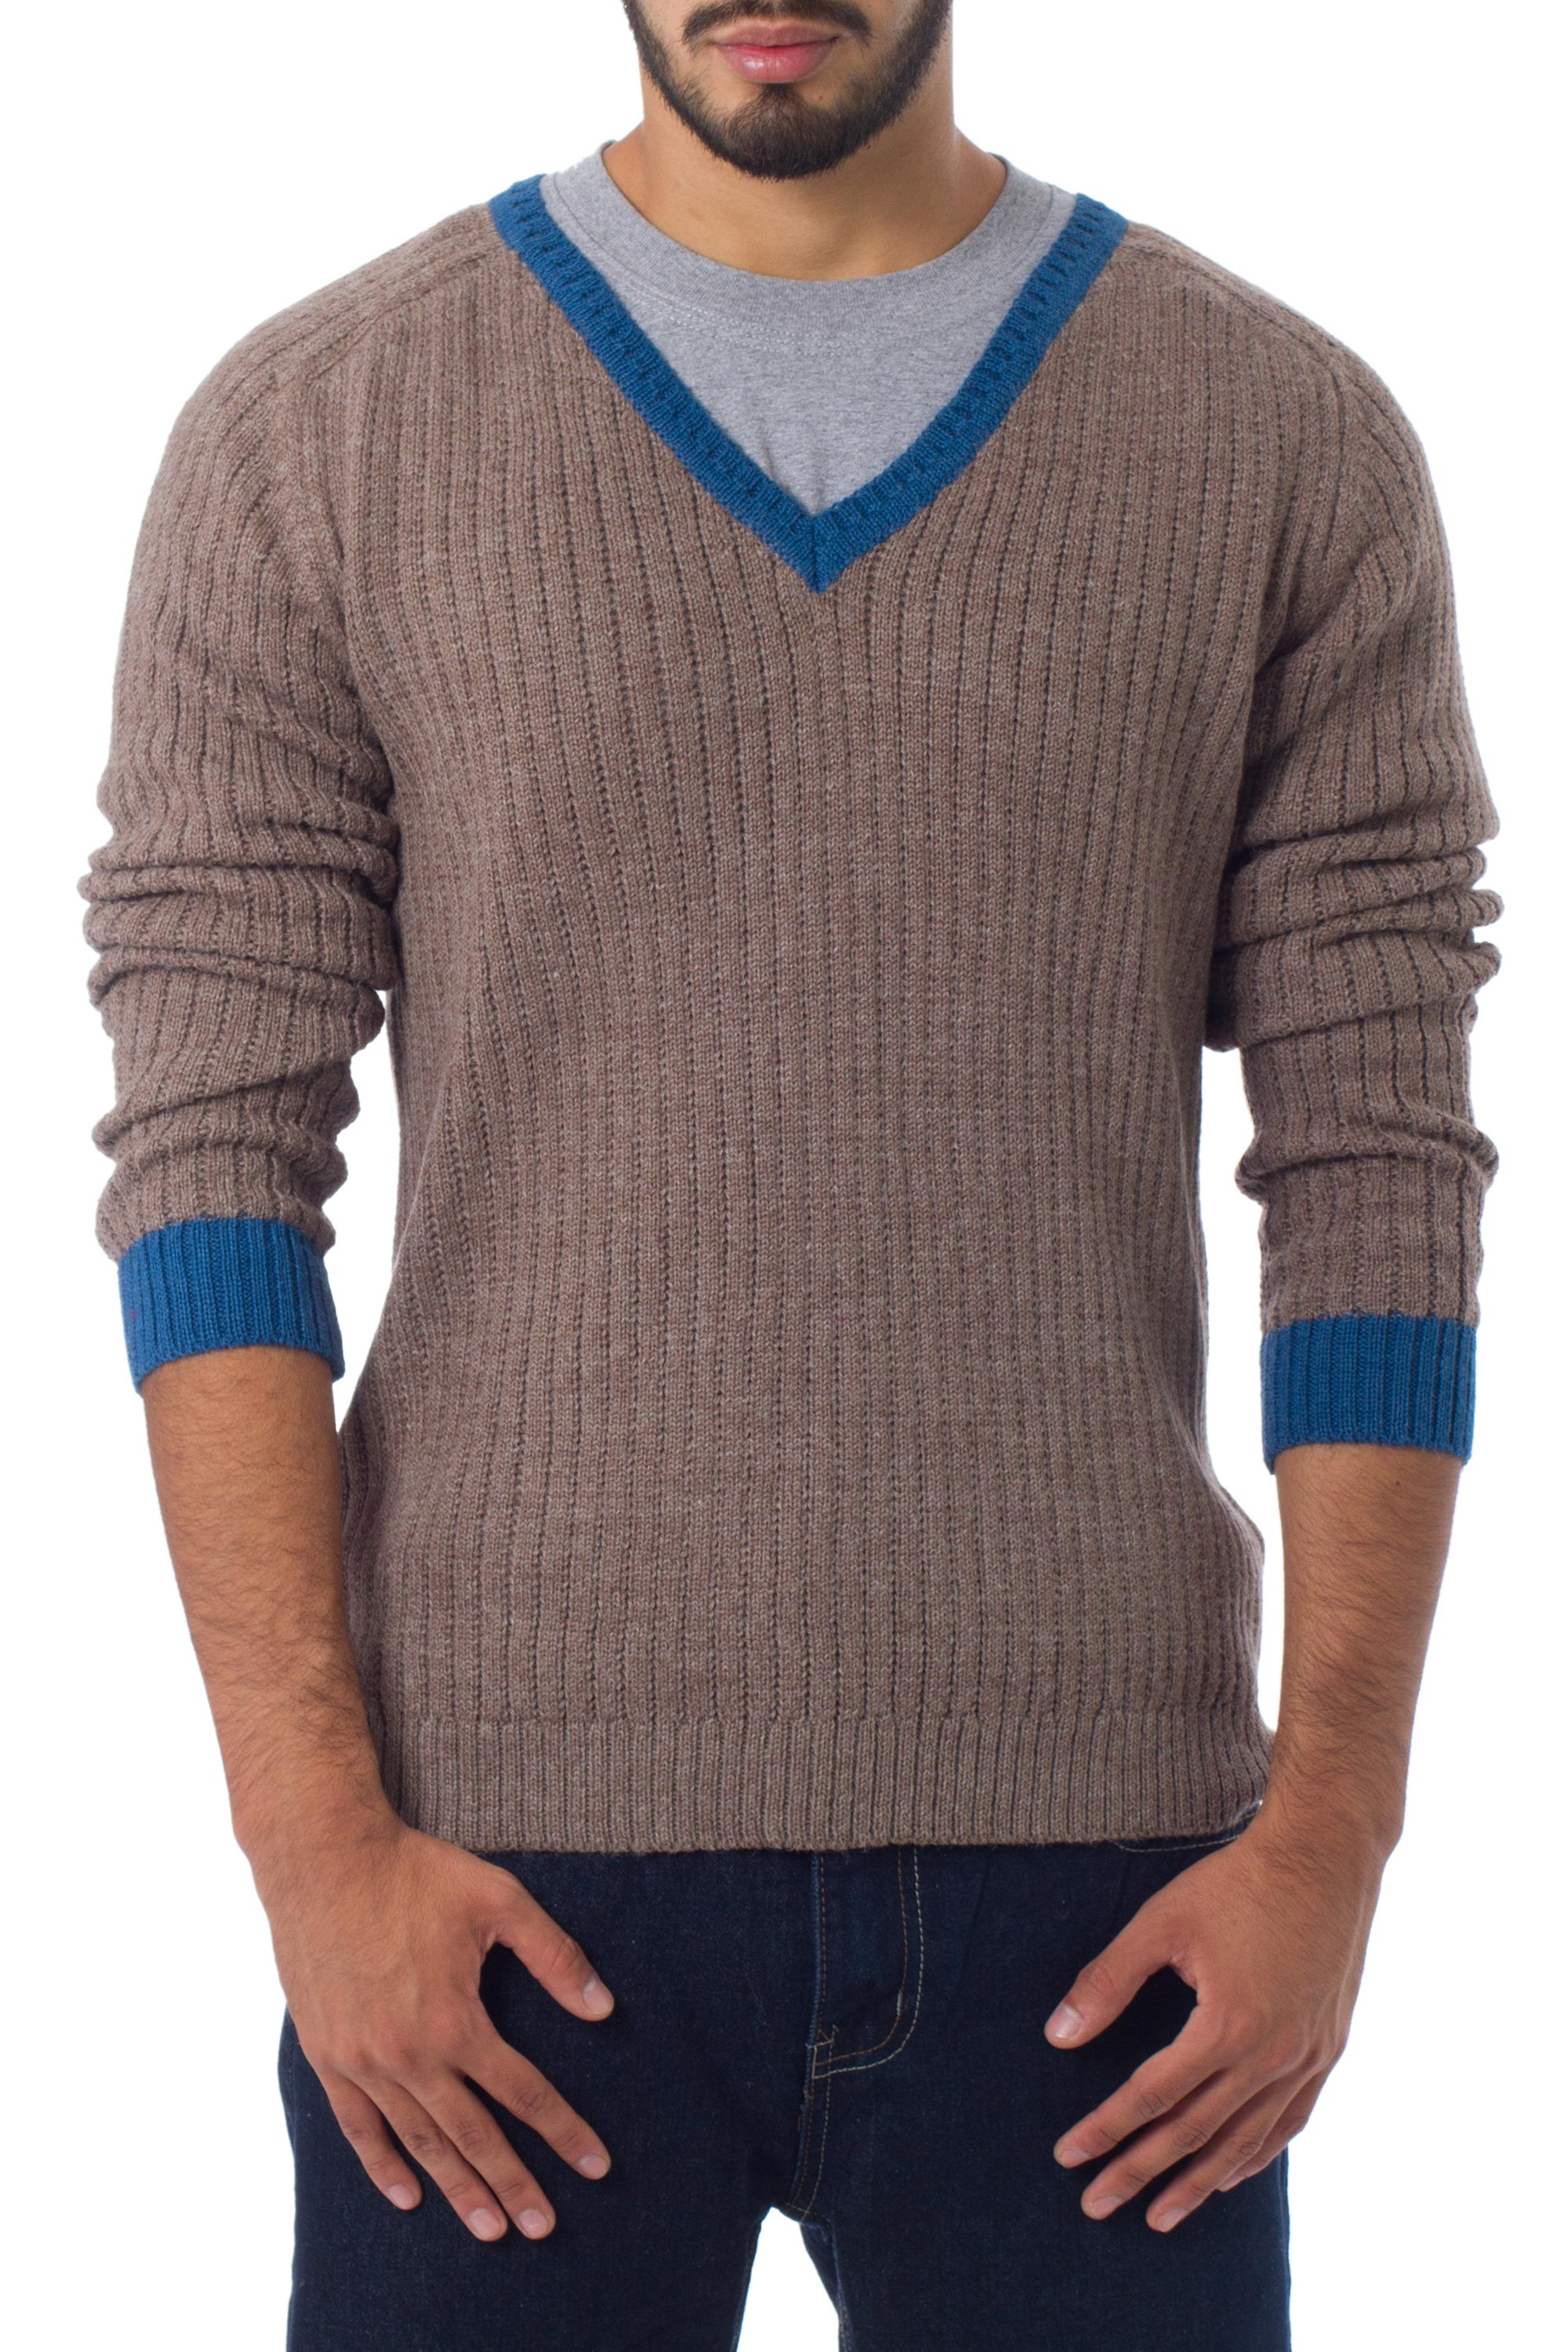 UNICEF Market | Men's Alpaca Wool Blend Sweater - Sophisticated Cool